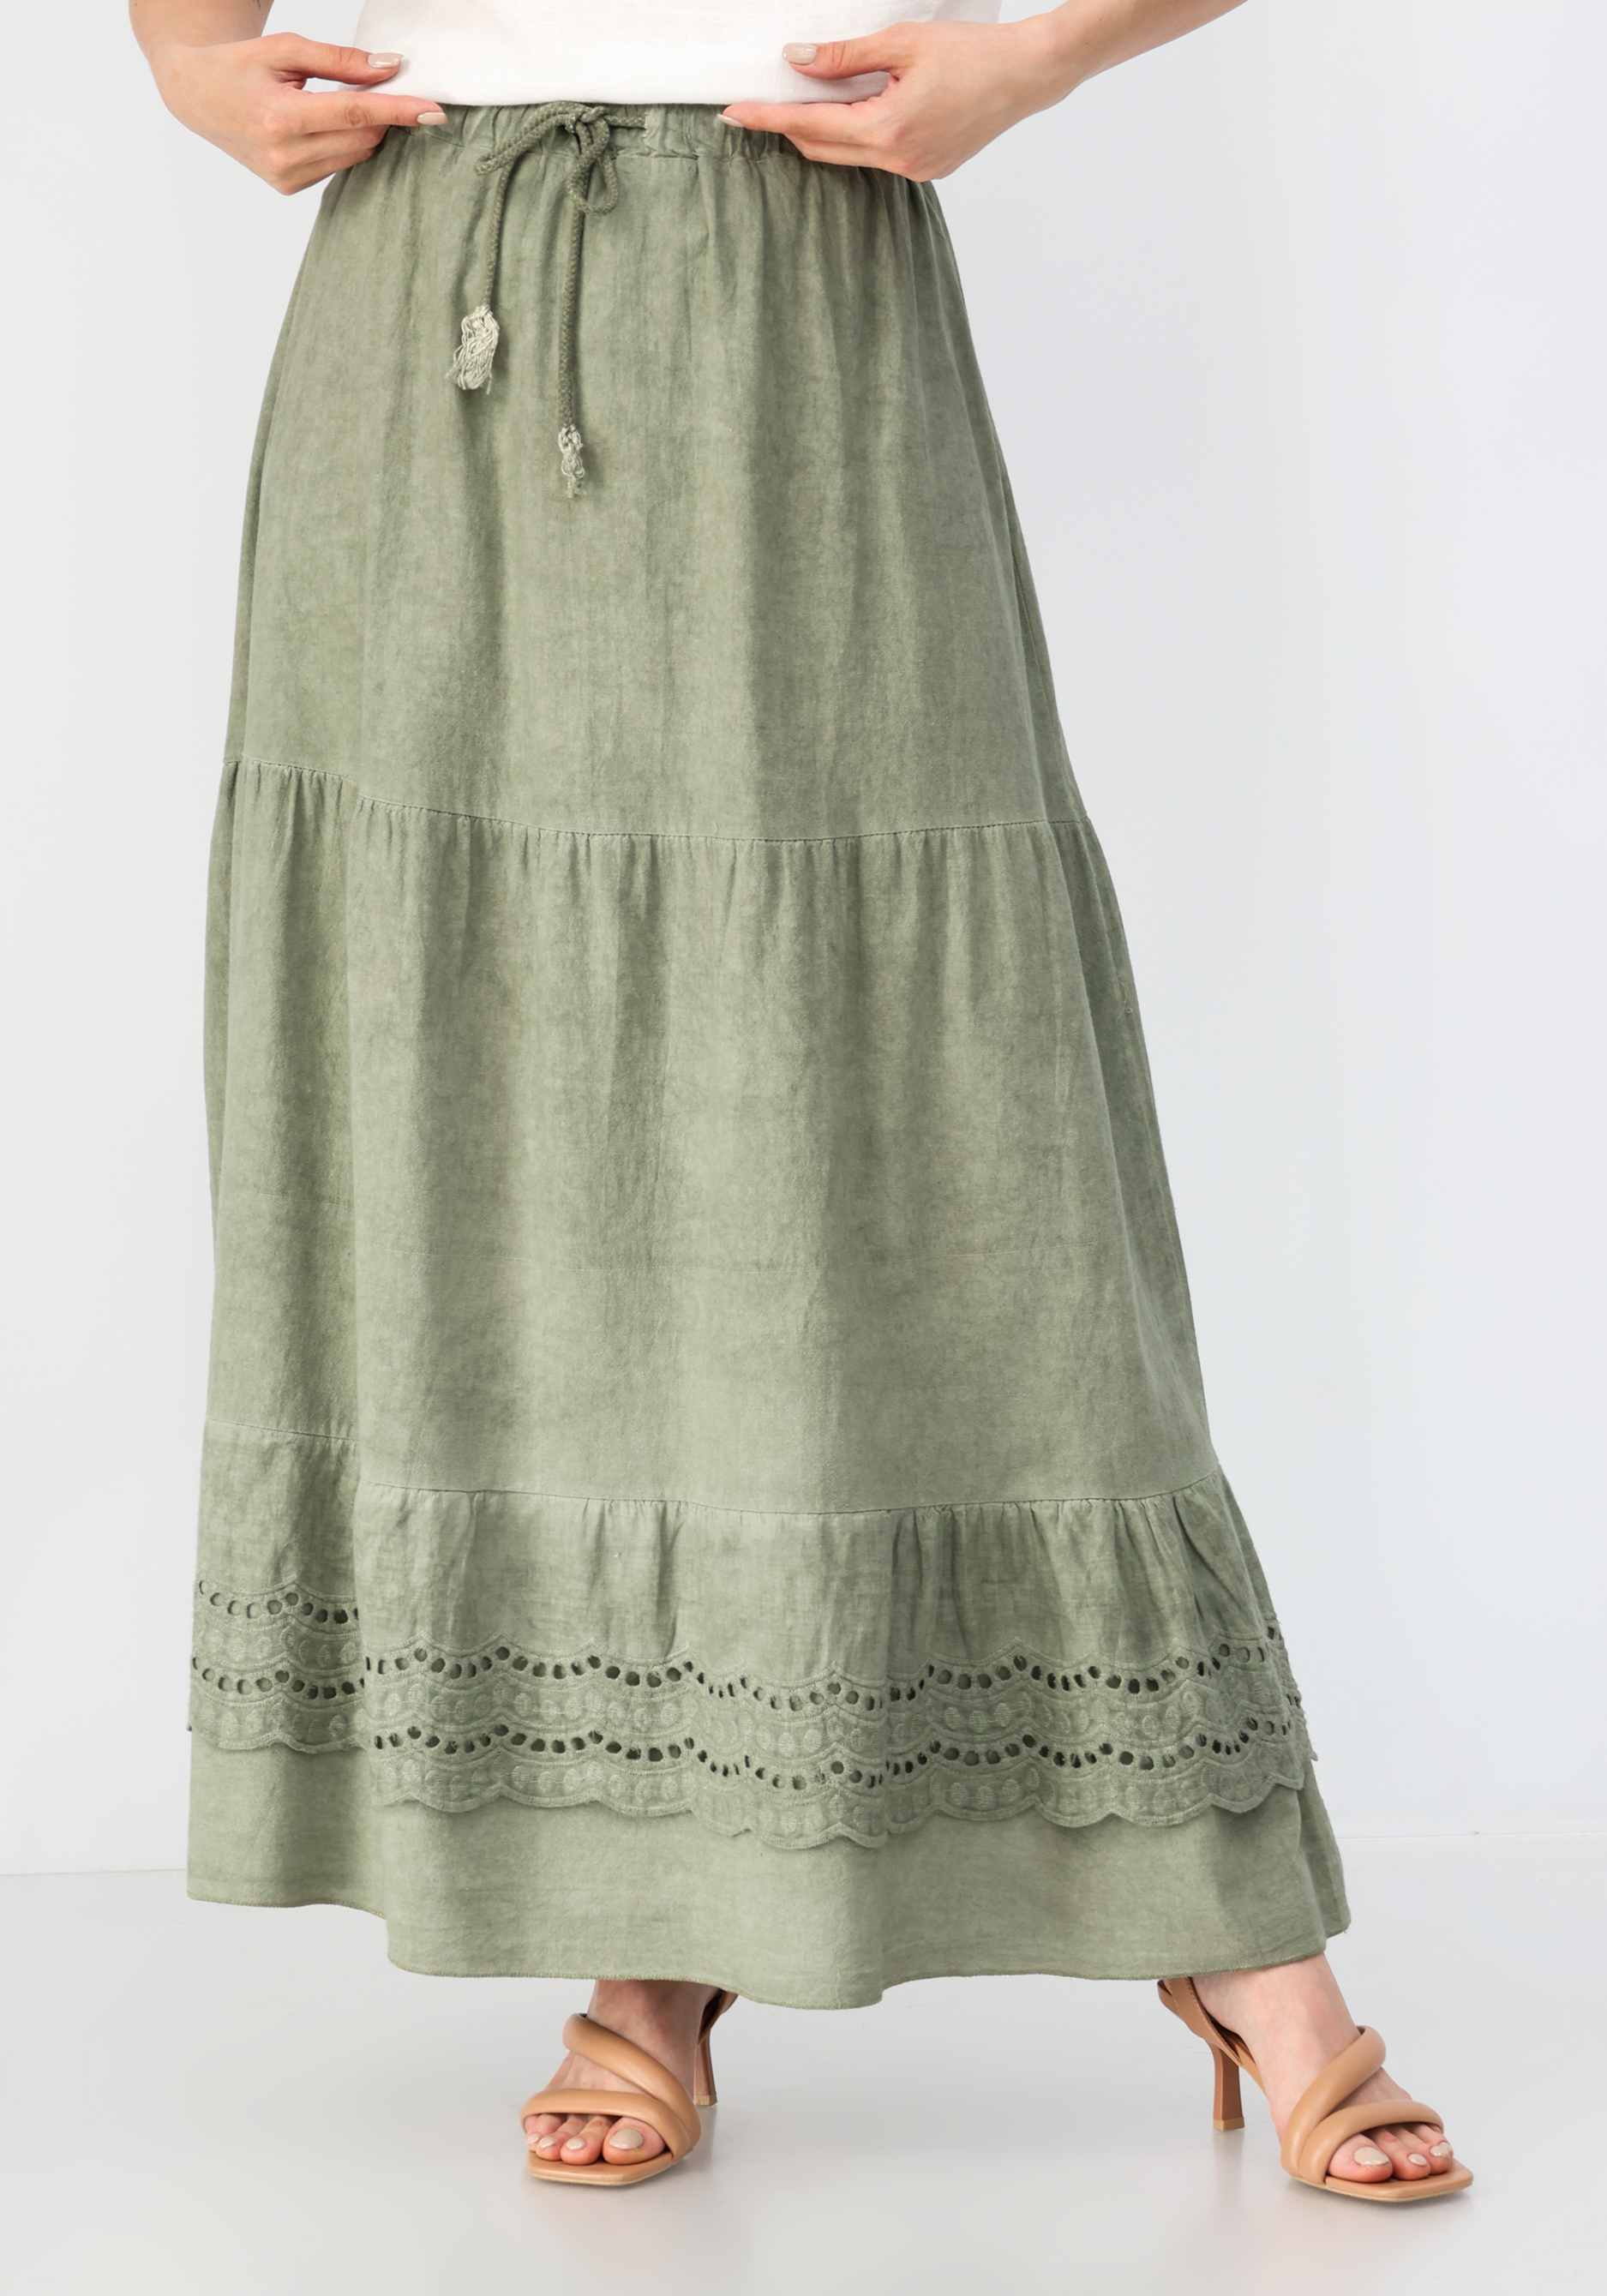 Юбка "Диодора" Alina Collection, размер 52, цвет зеленый